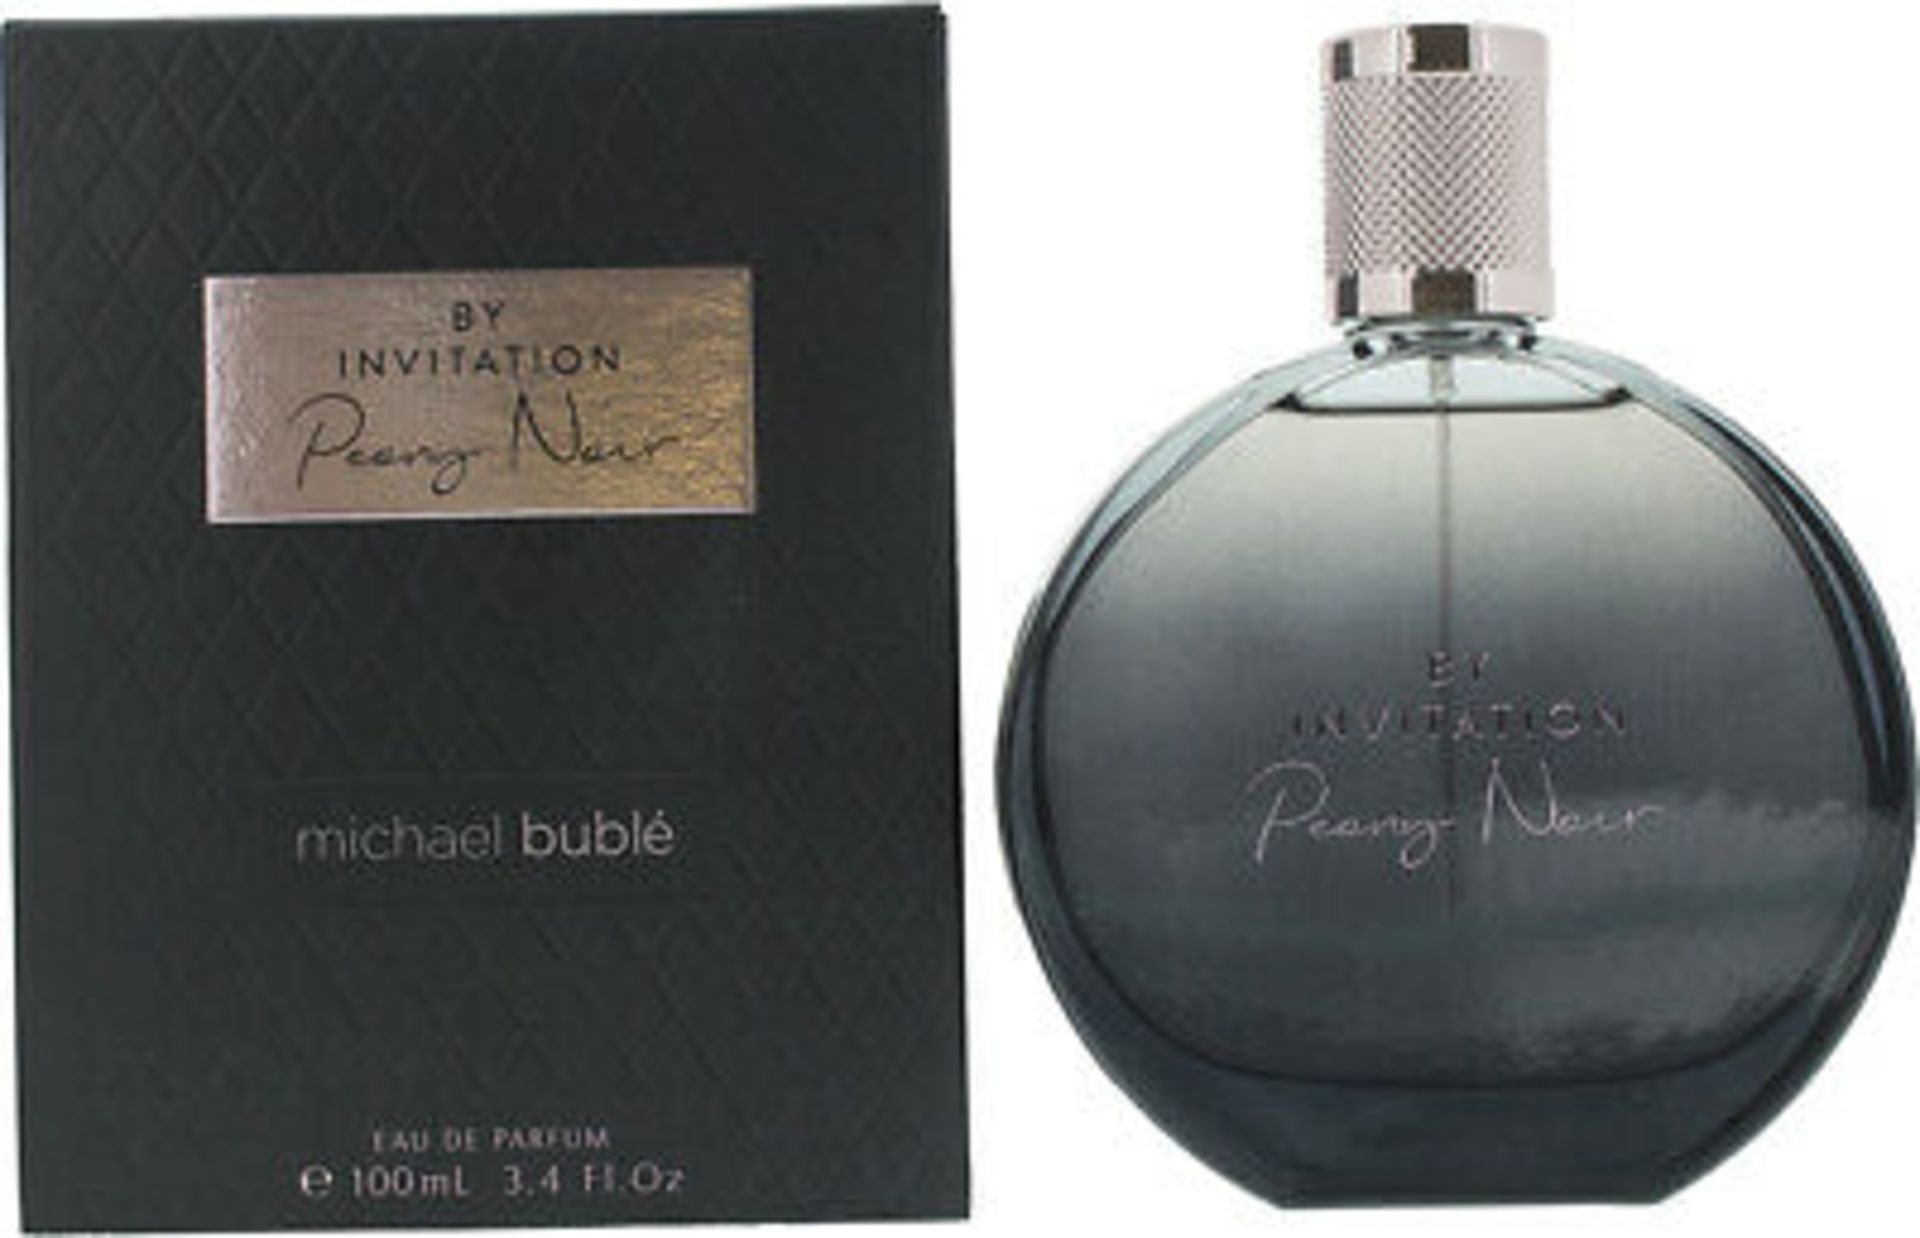 + VAT Brand New Michael Buble By Invitation Peony Noir 100ml EDP